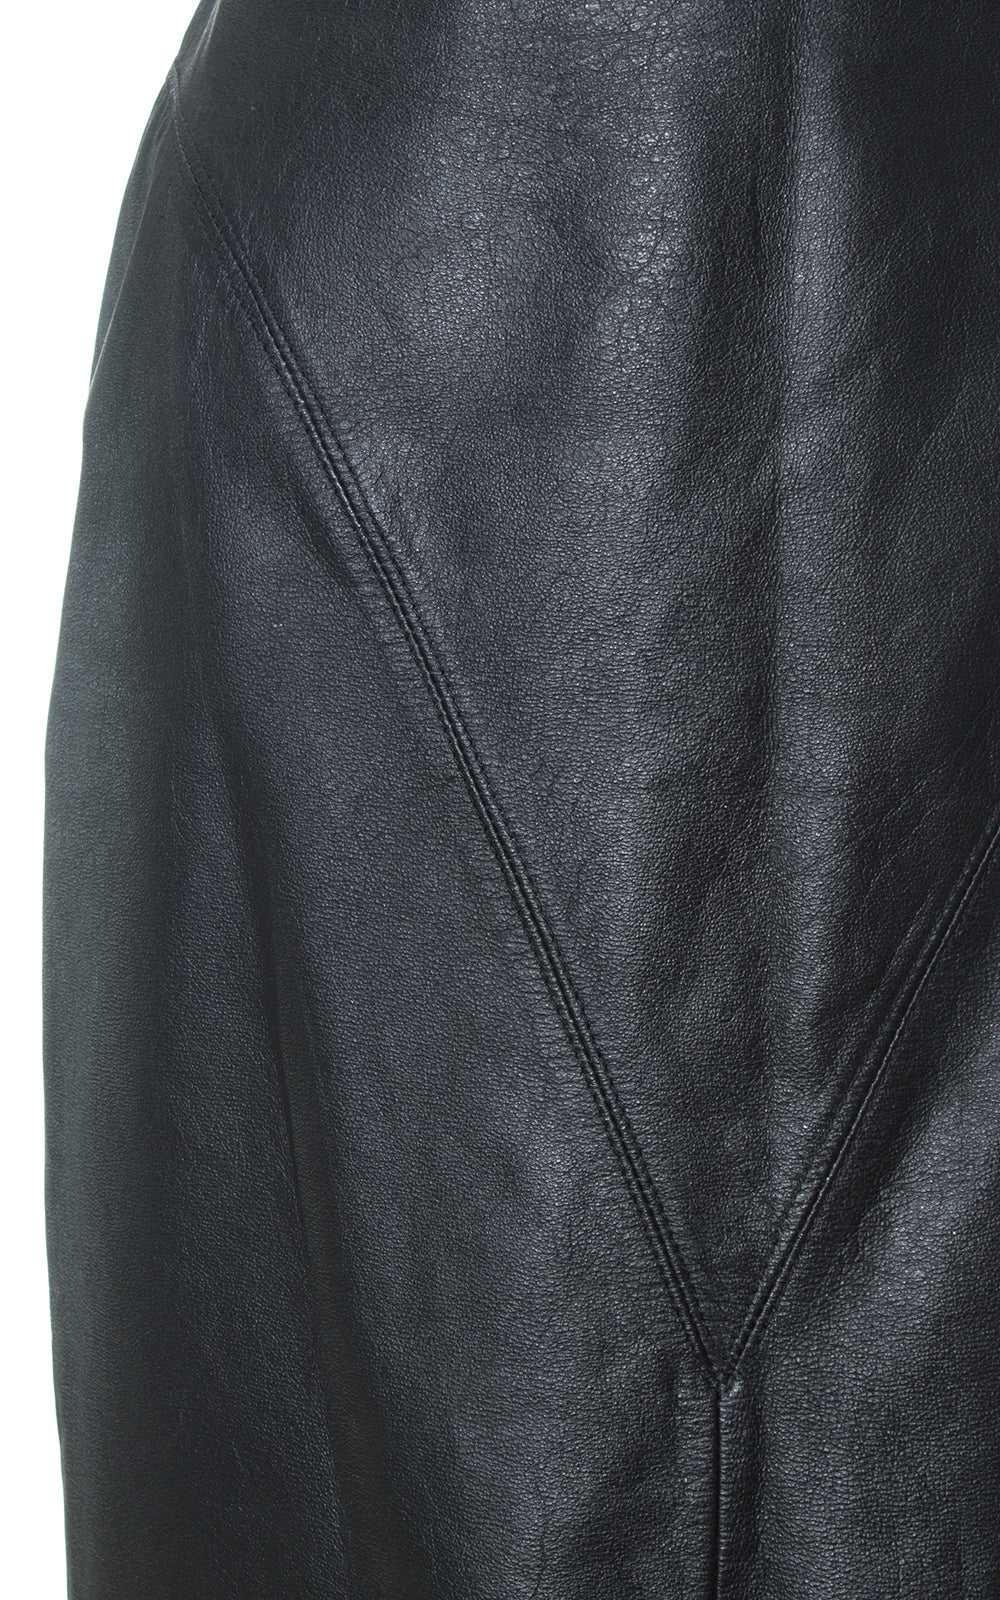 1980s Wilsons Black Leather Snap Slit Pencil Skirt